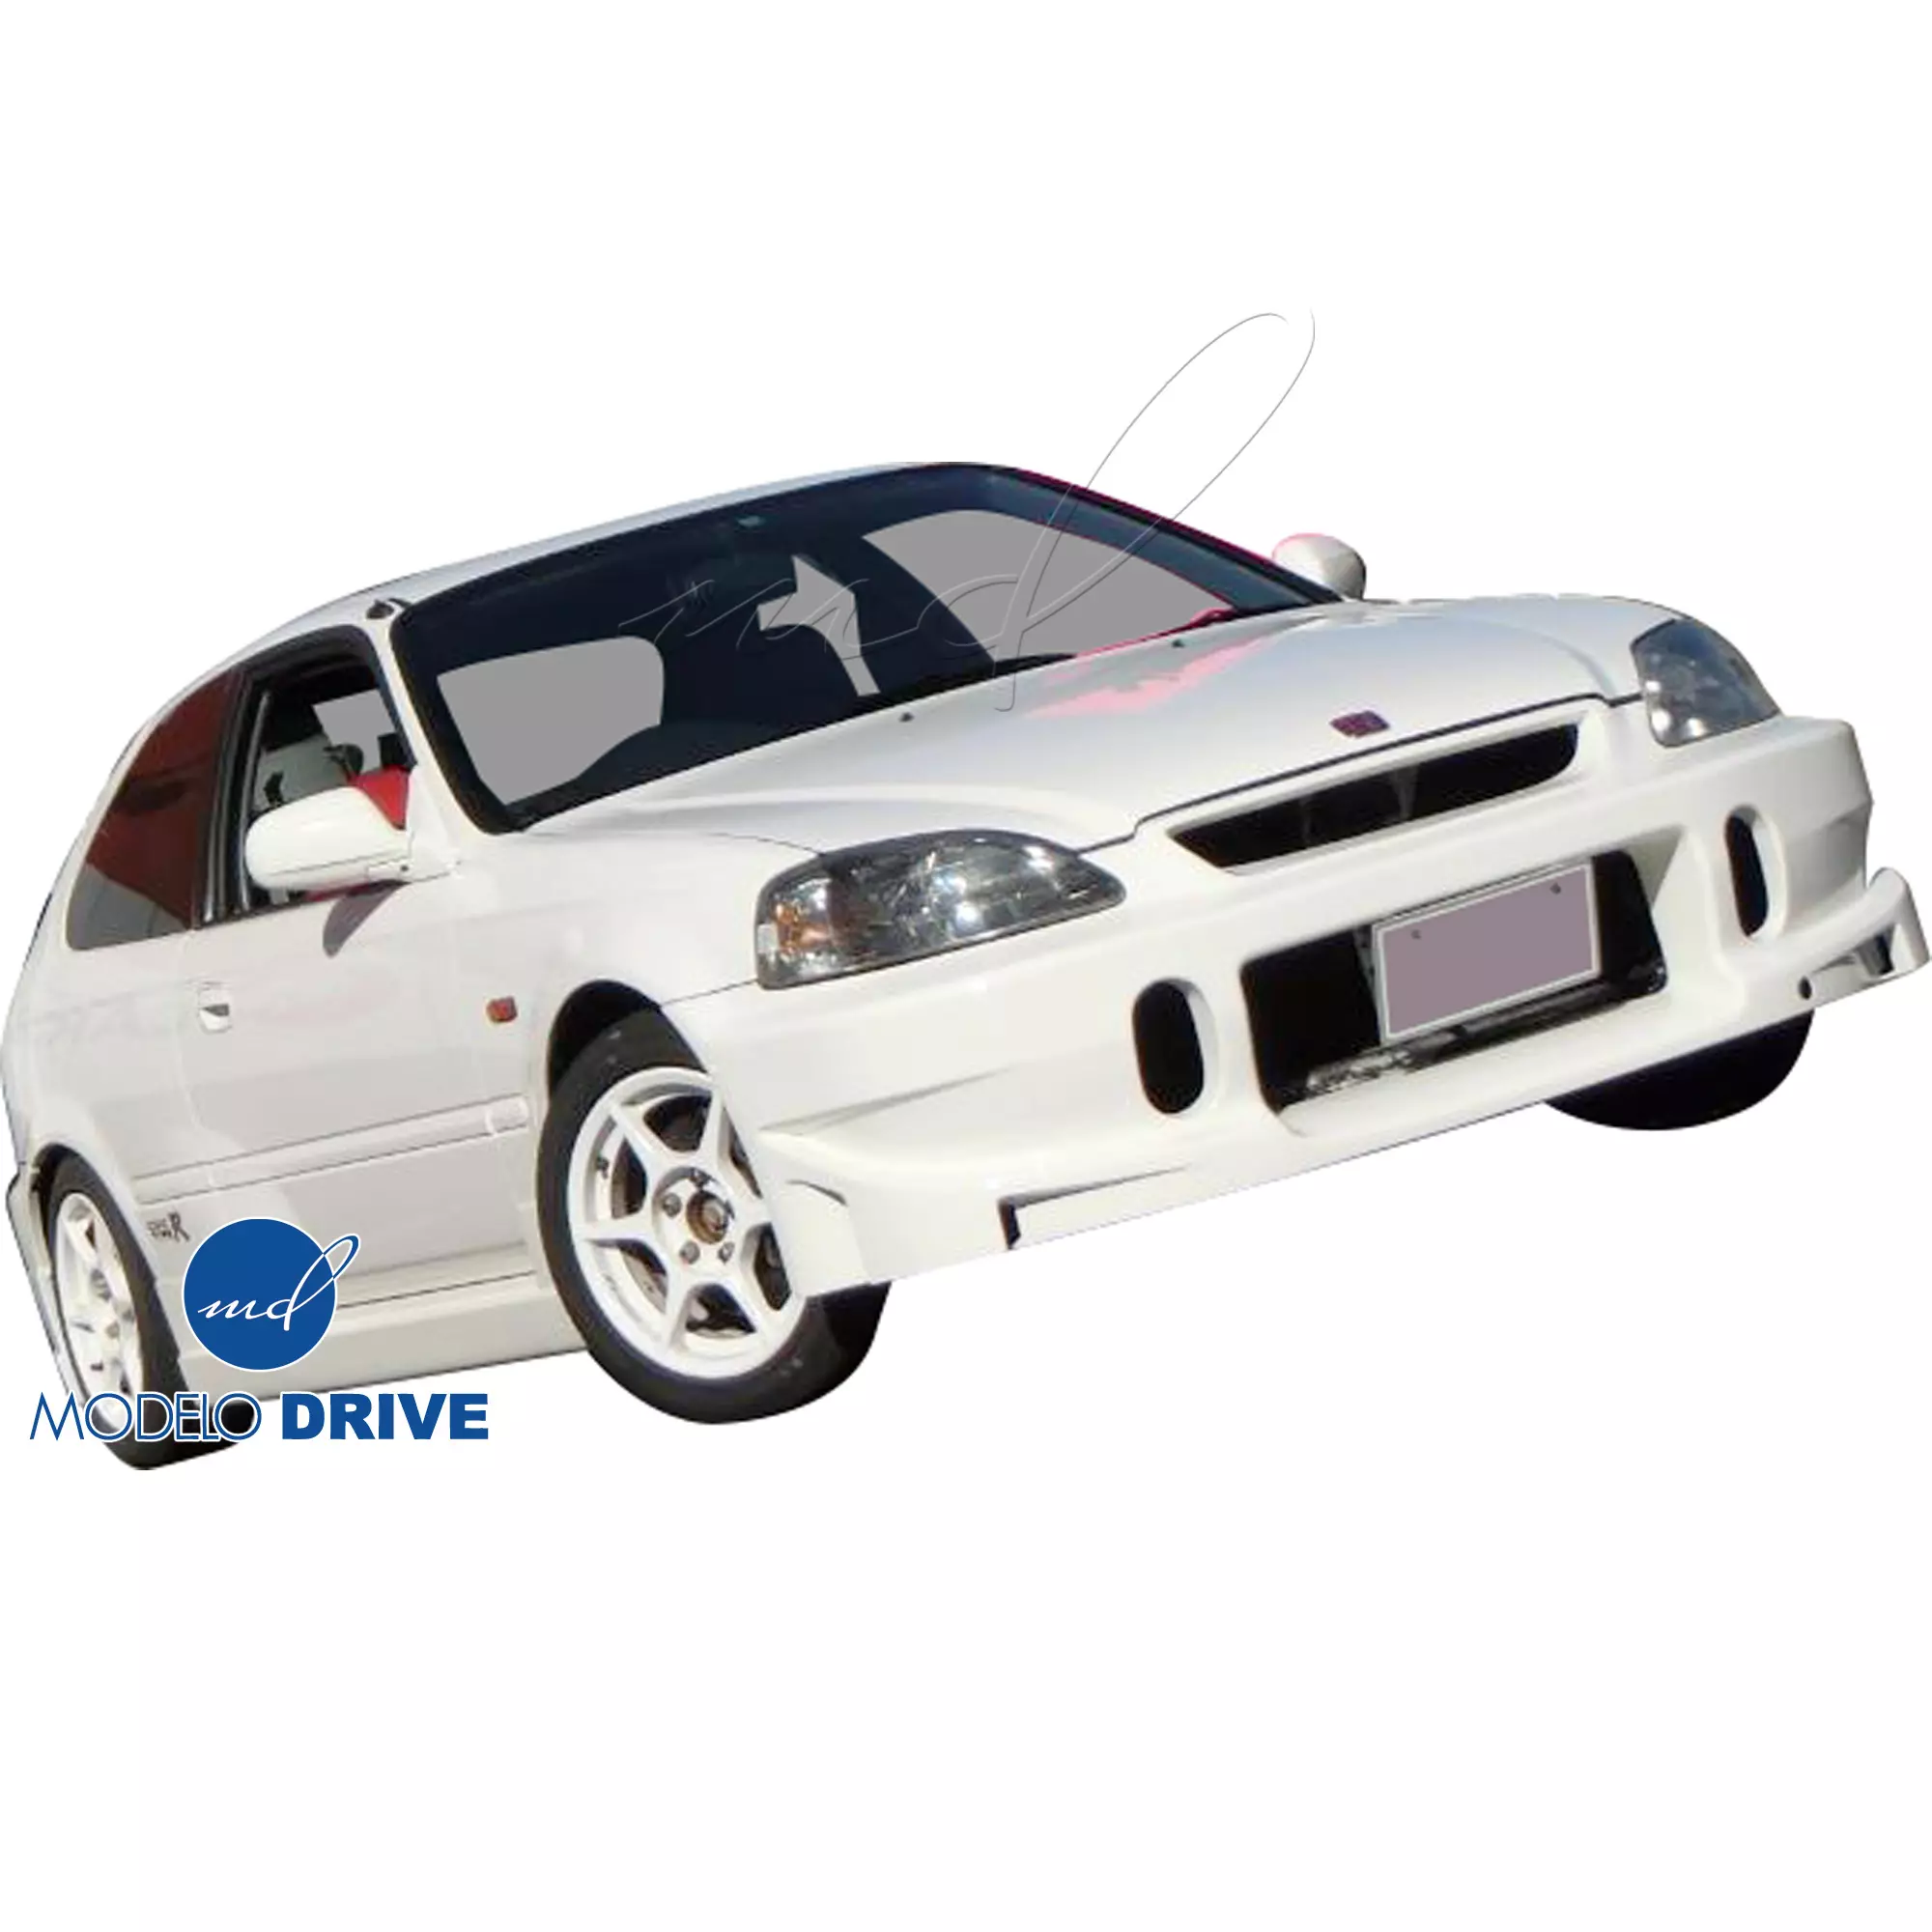 ModeloDrive FRP BCLU Body Kit 4pc > Honda Civic EK9 1996-1998 > 3-Door Hatch - Image 12